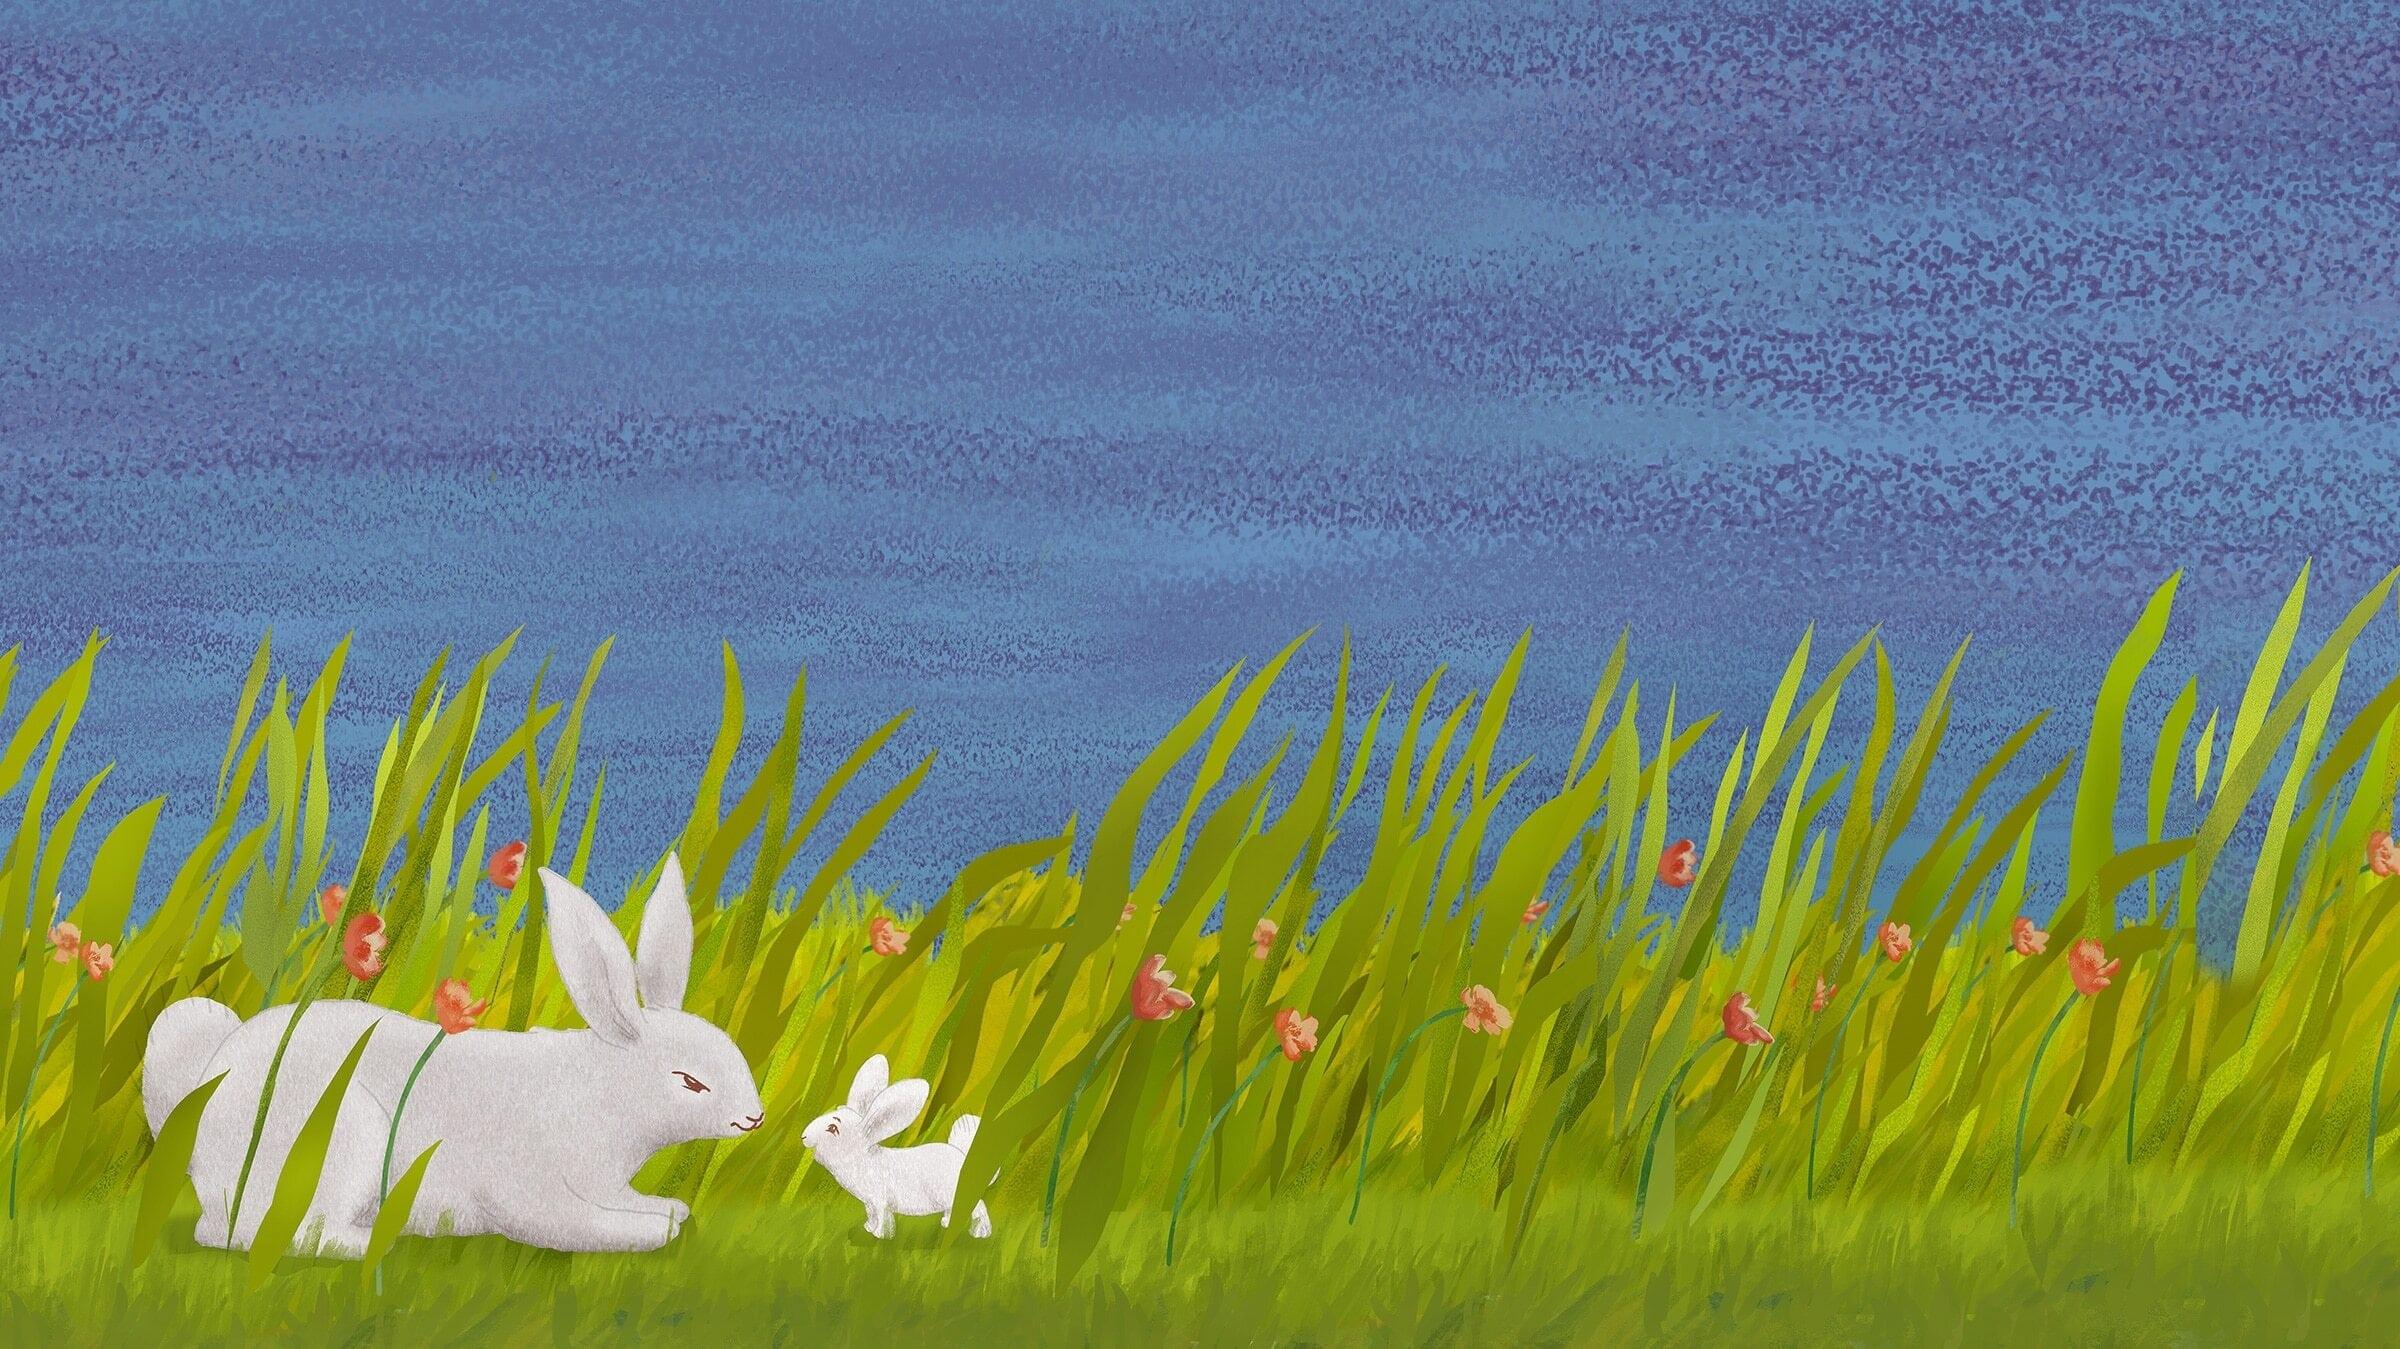 The Runaway Bunny backdrop